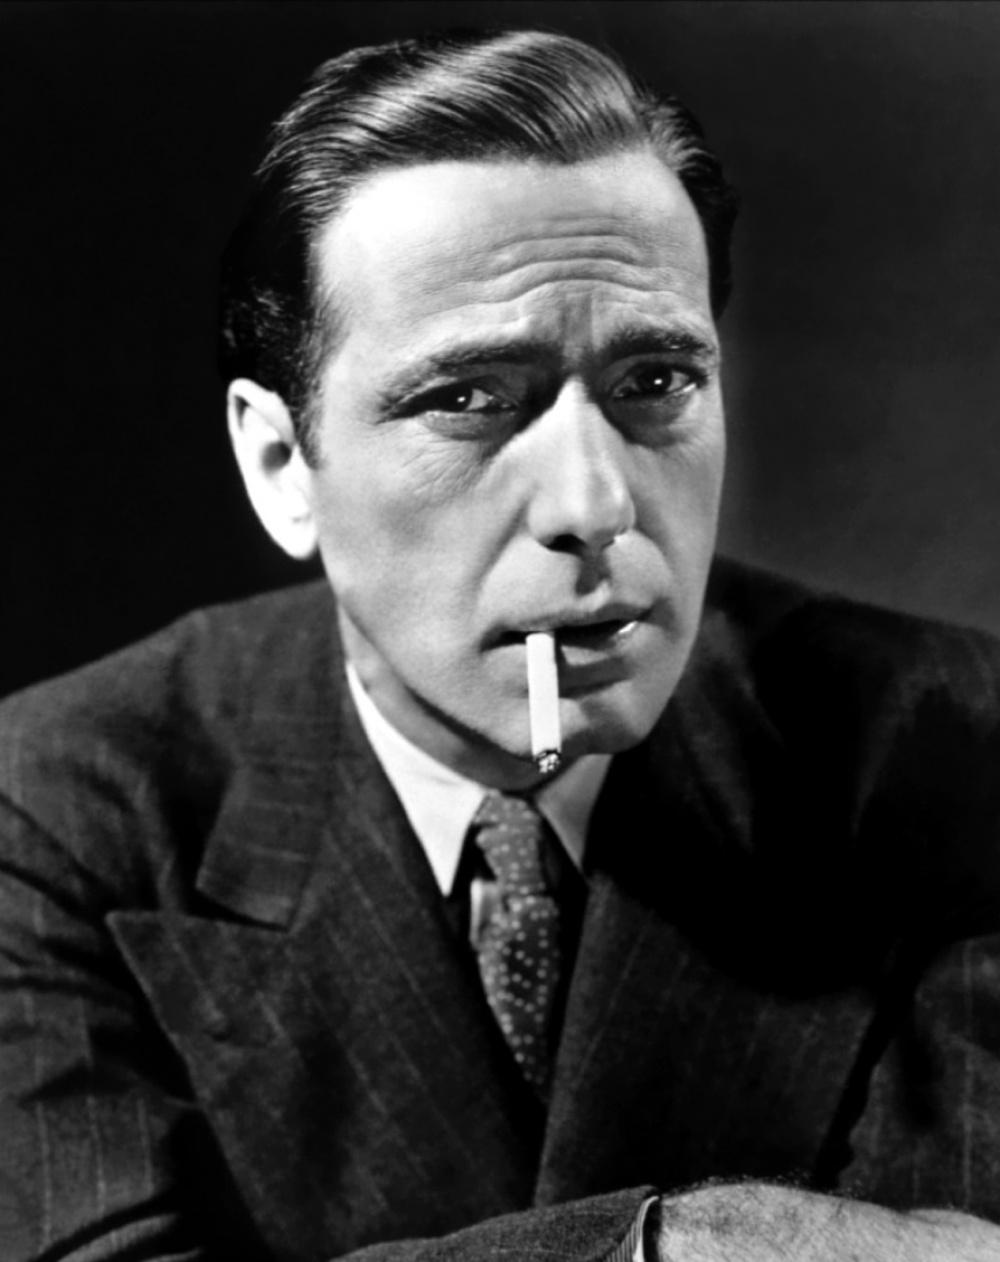 Photo №1770 Humphrey Bogart.